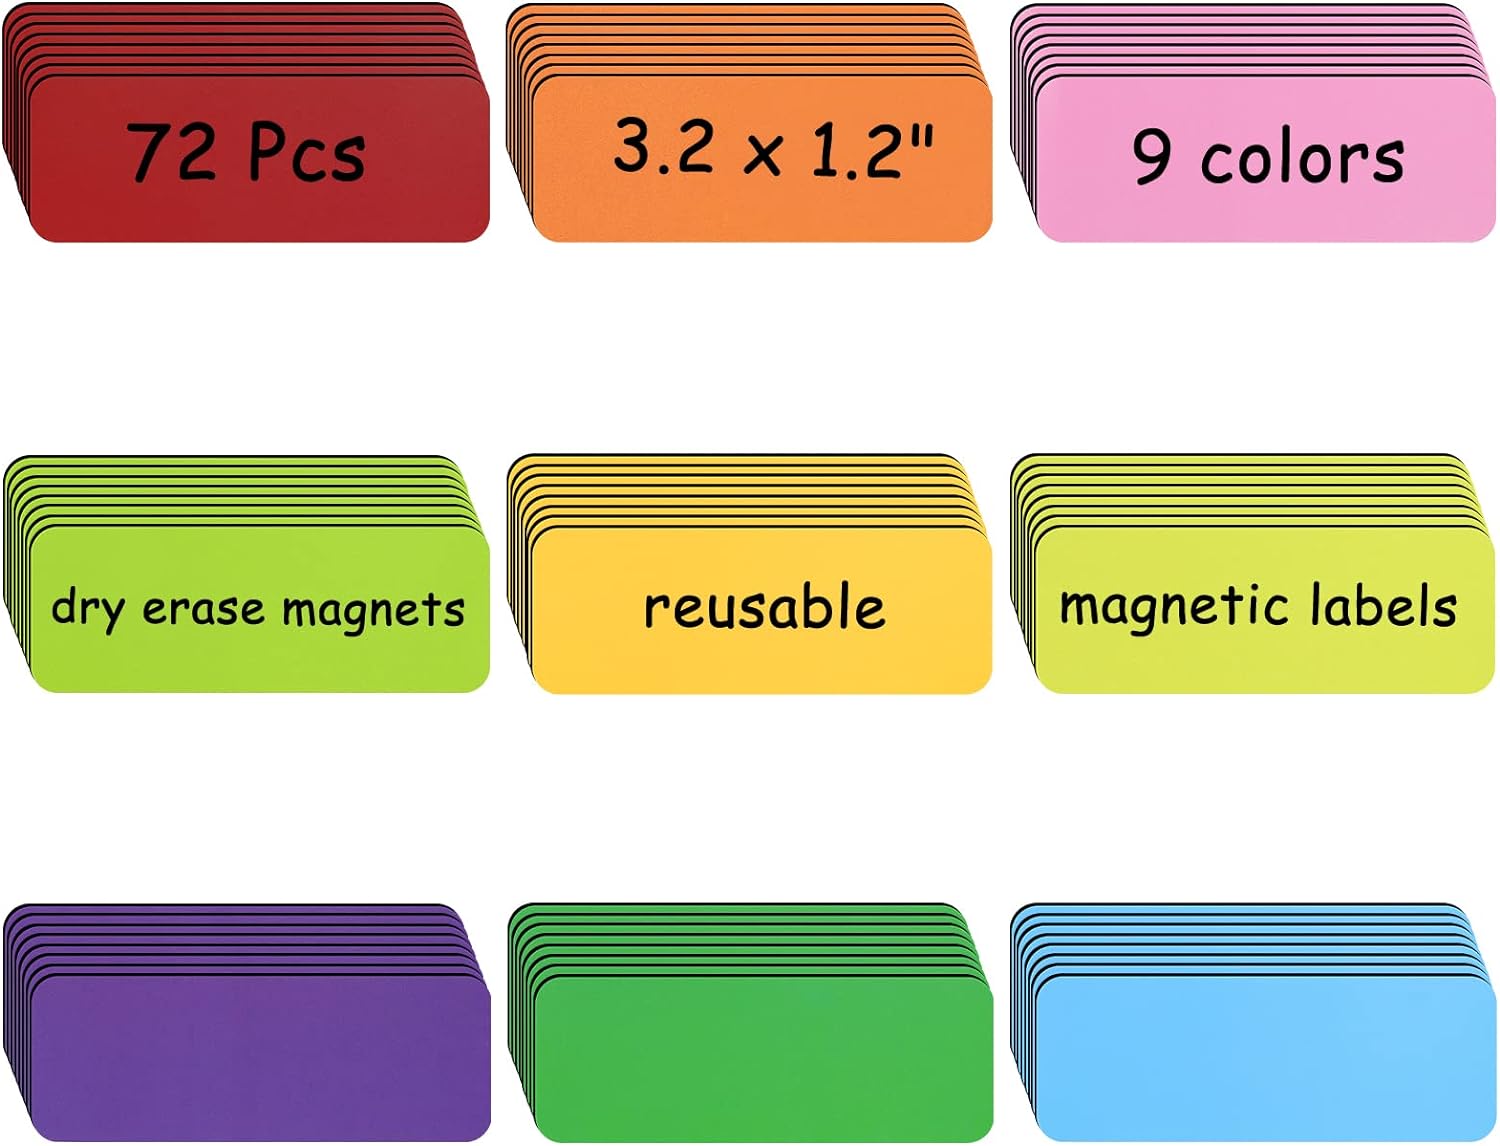 72Pcs Dry Erase Magnetic Labels,3.2 x 1.2" for Whiteboard,Refrigerator (9 Colors) - TTpen